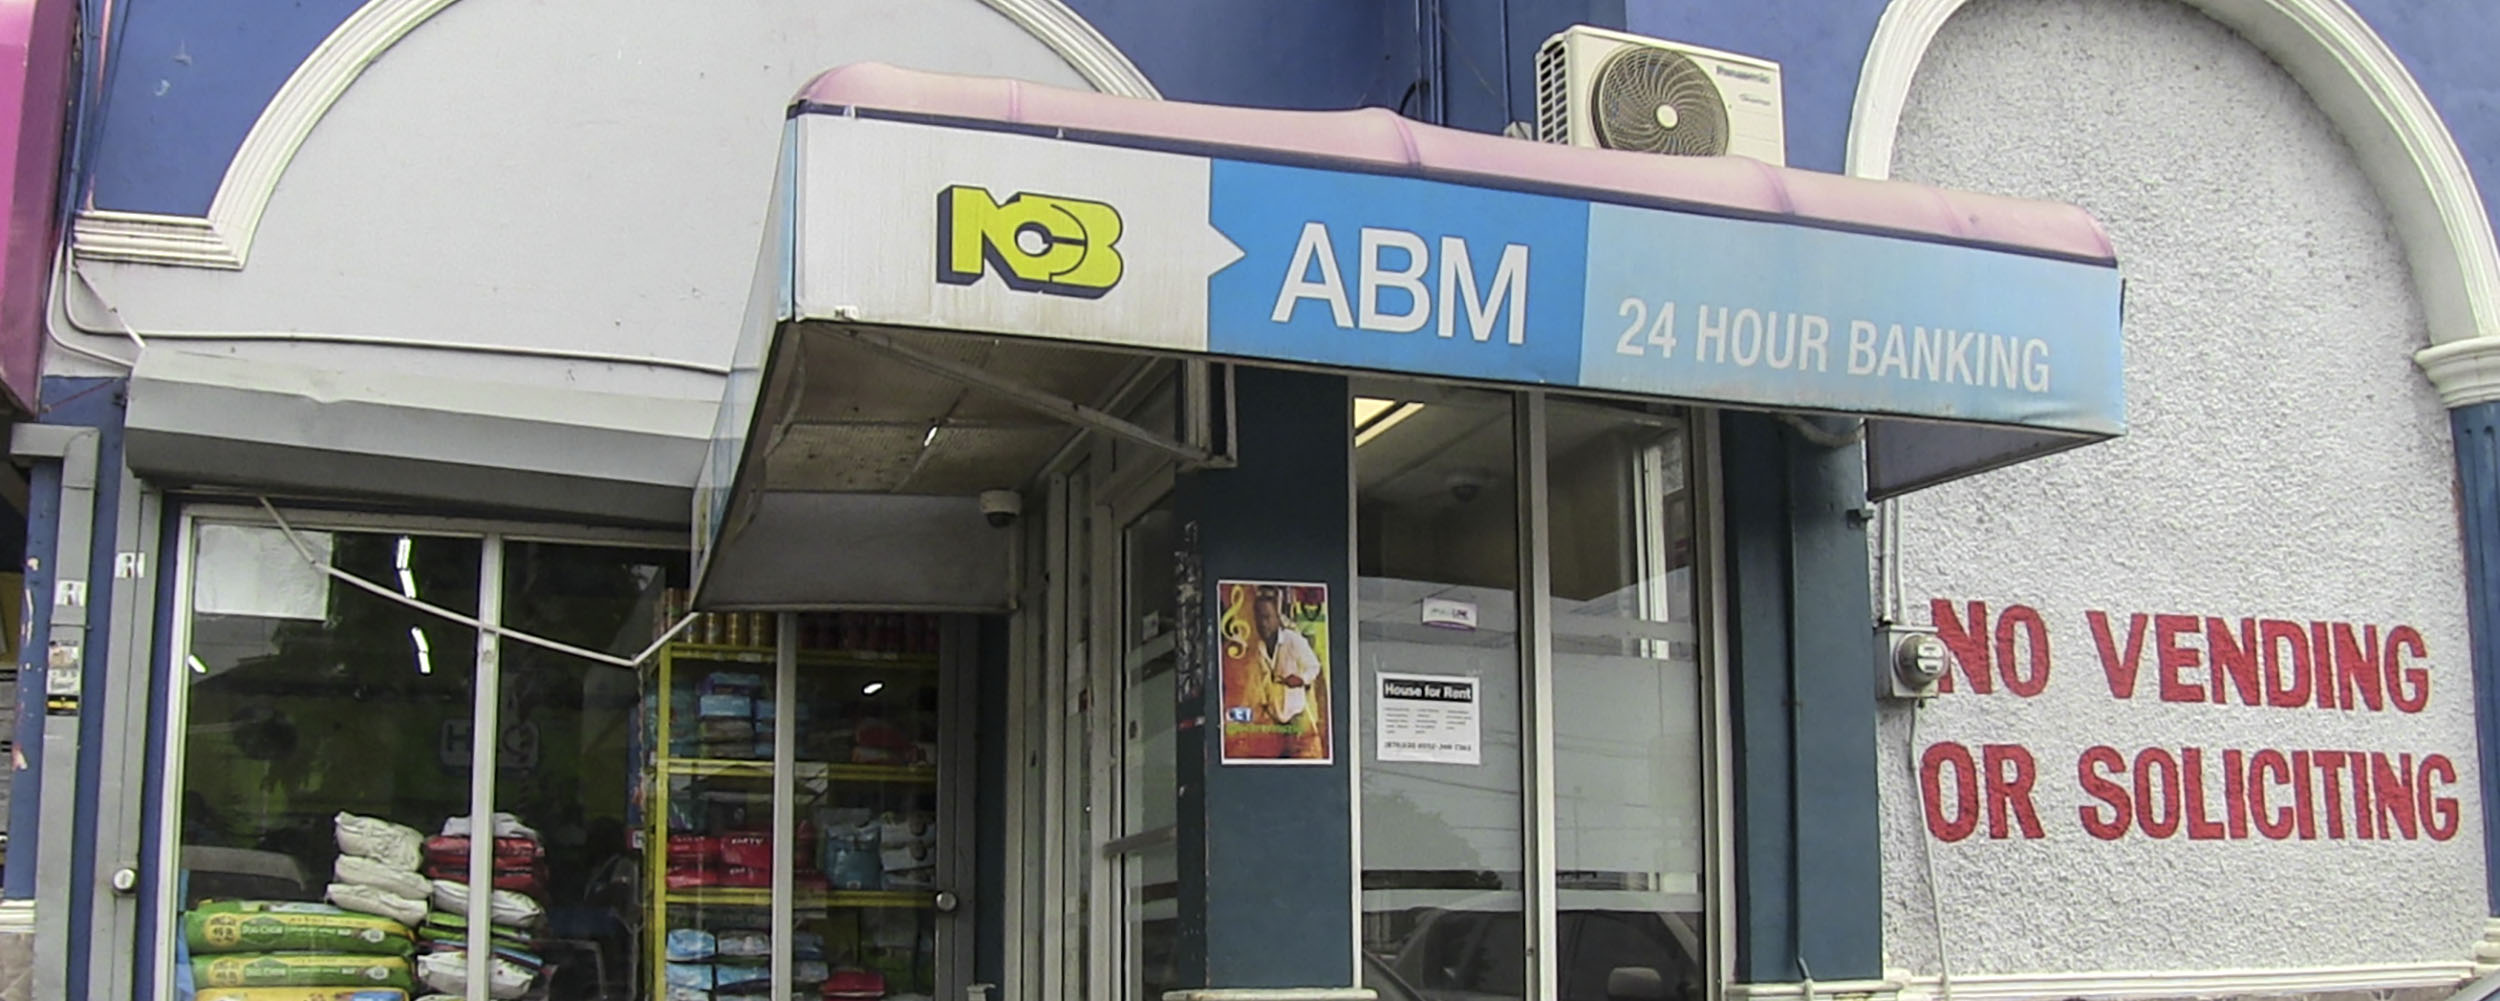 NCB National Commercal Bank ABM - Value Master Plaza - Negril Center - Negril Jamaica